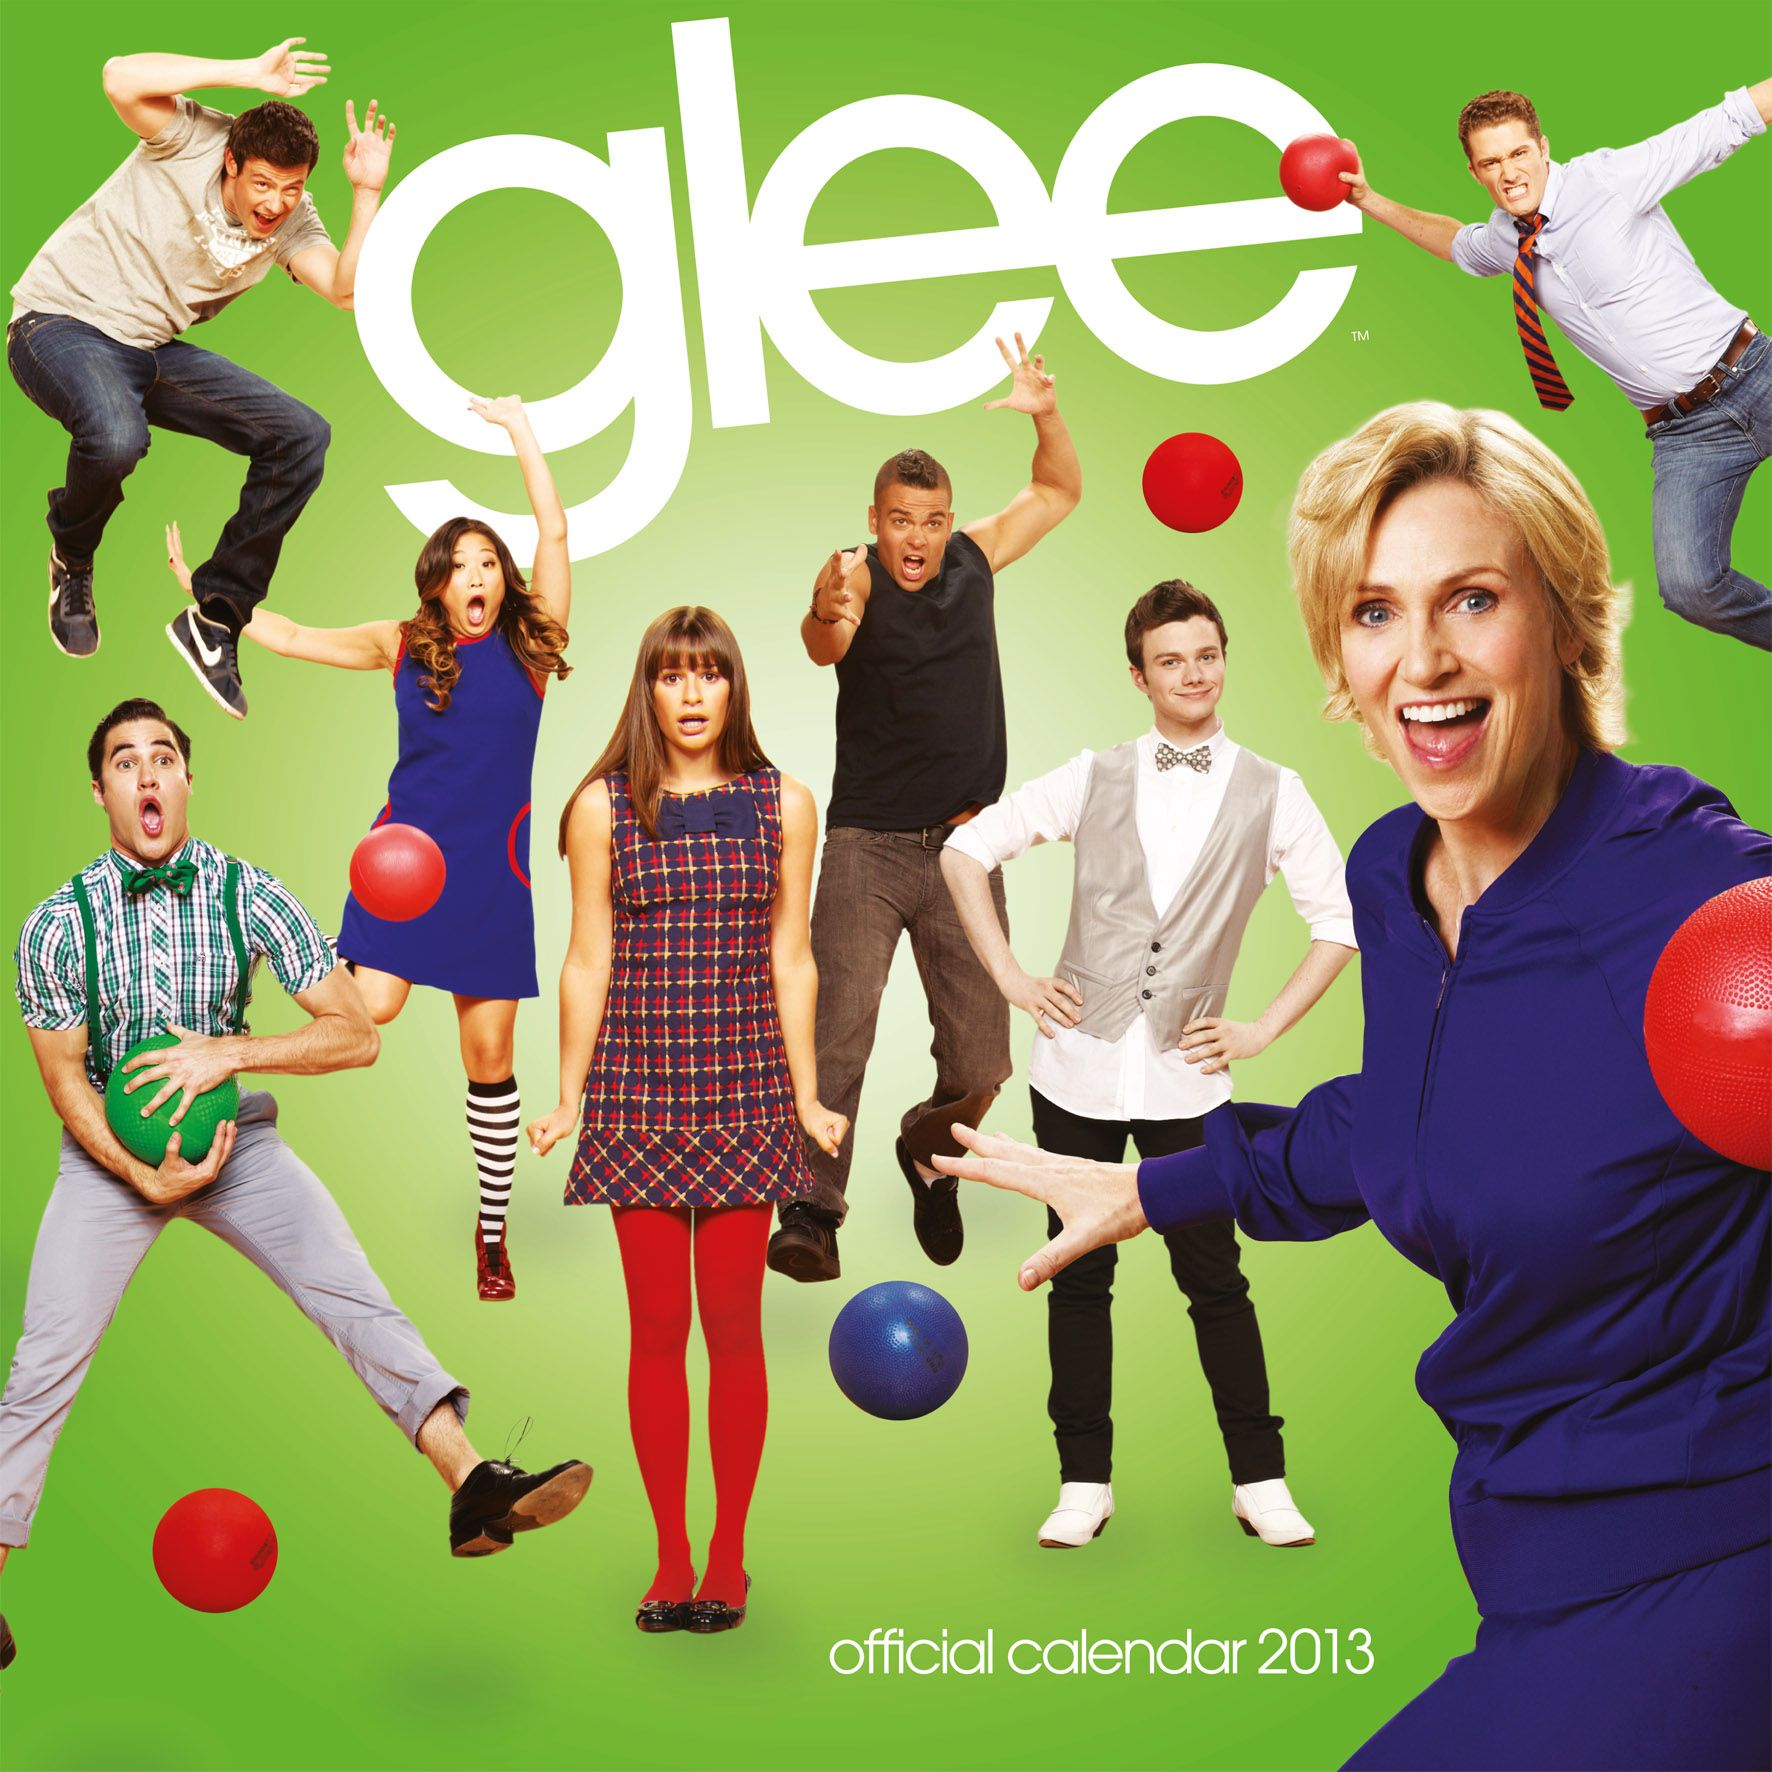 Glee wallpaper, TV Show, HQ Glee pictureK Wallpaper 2019